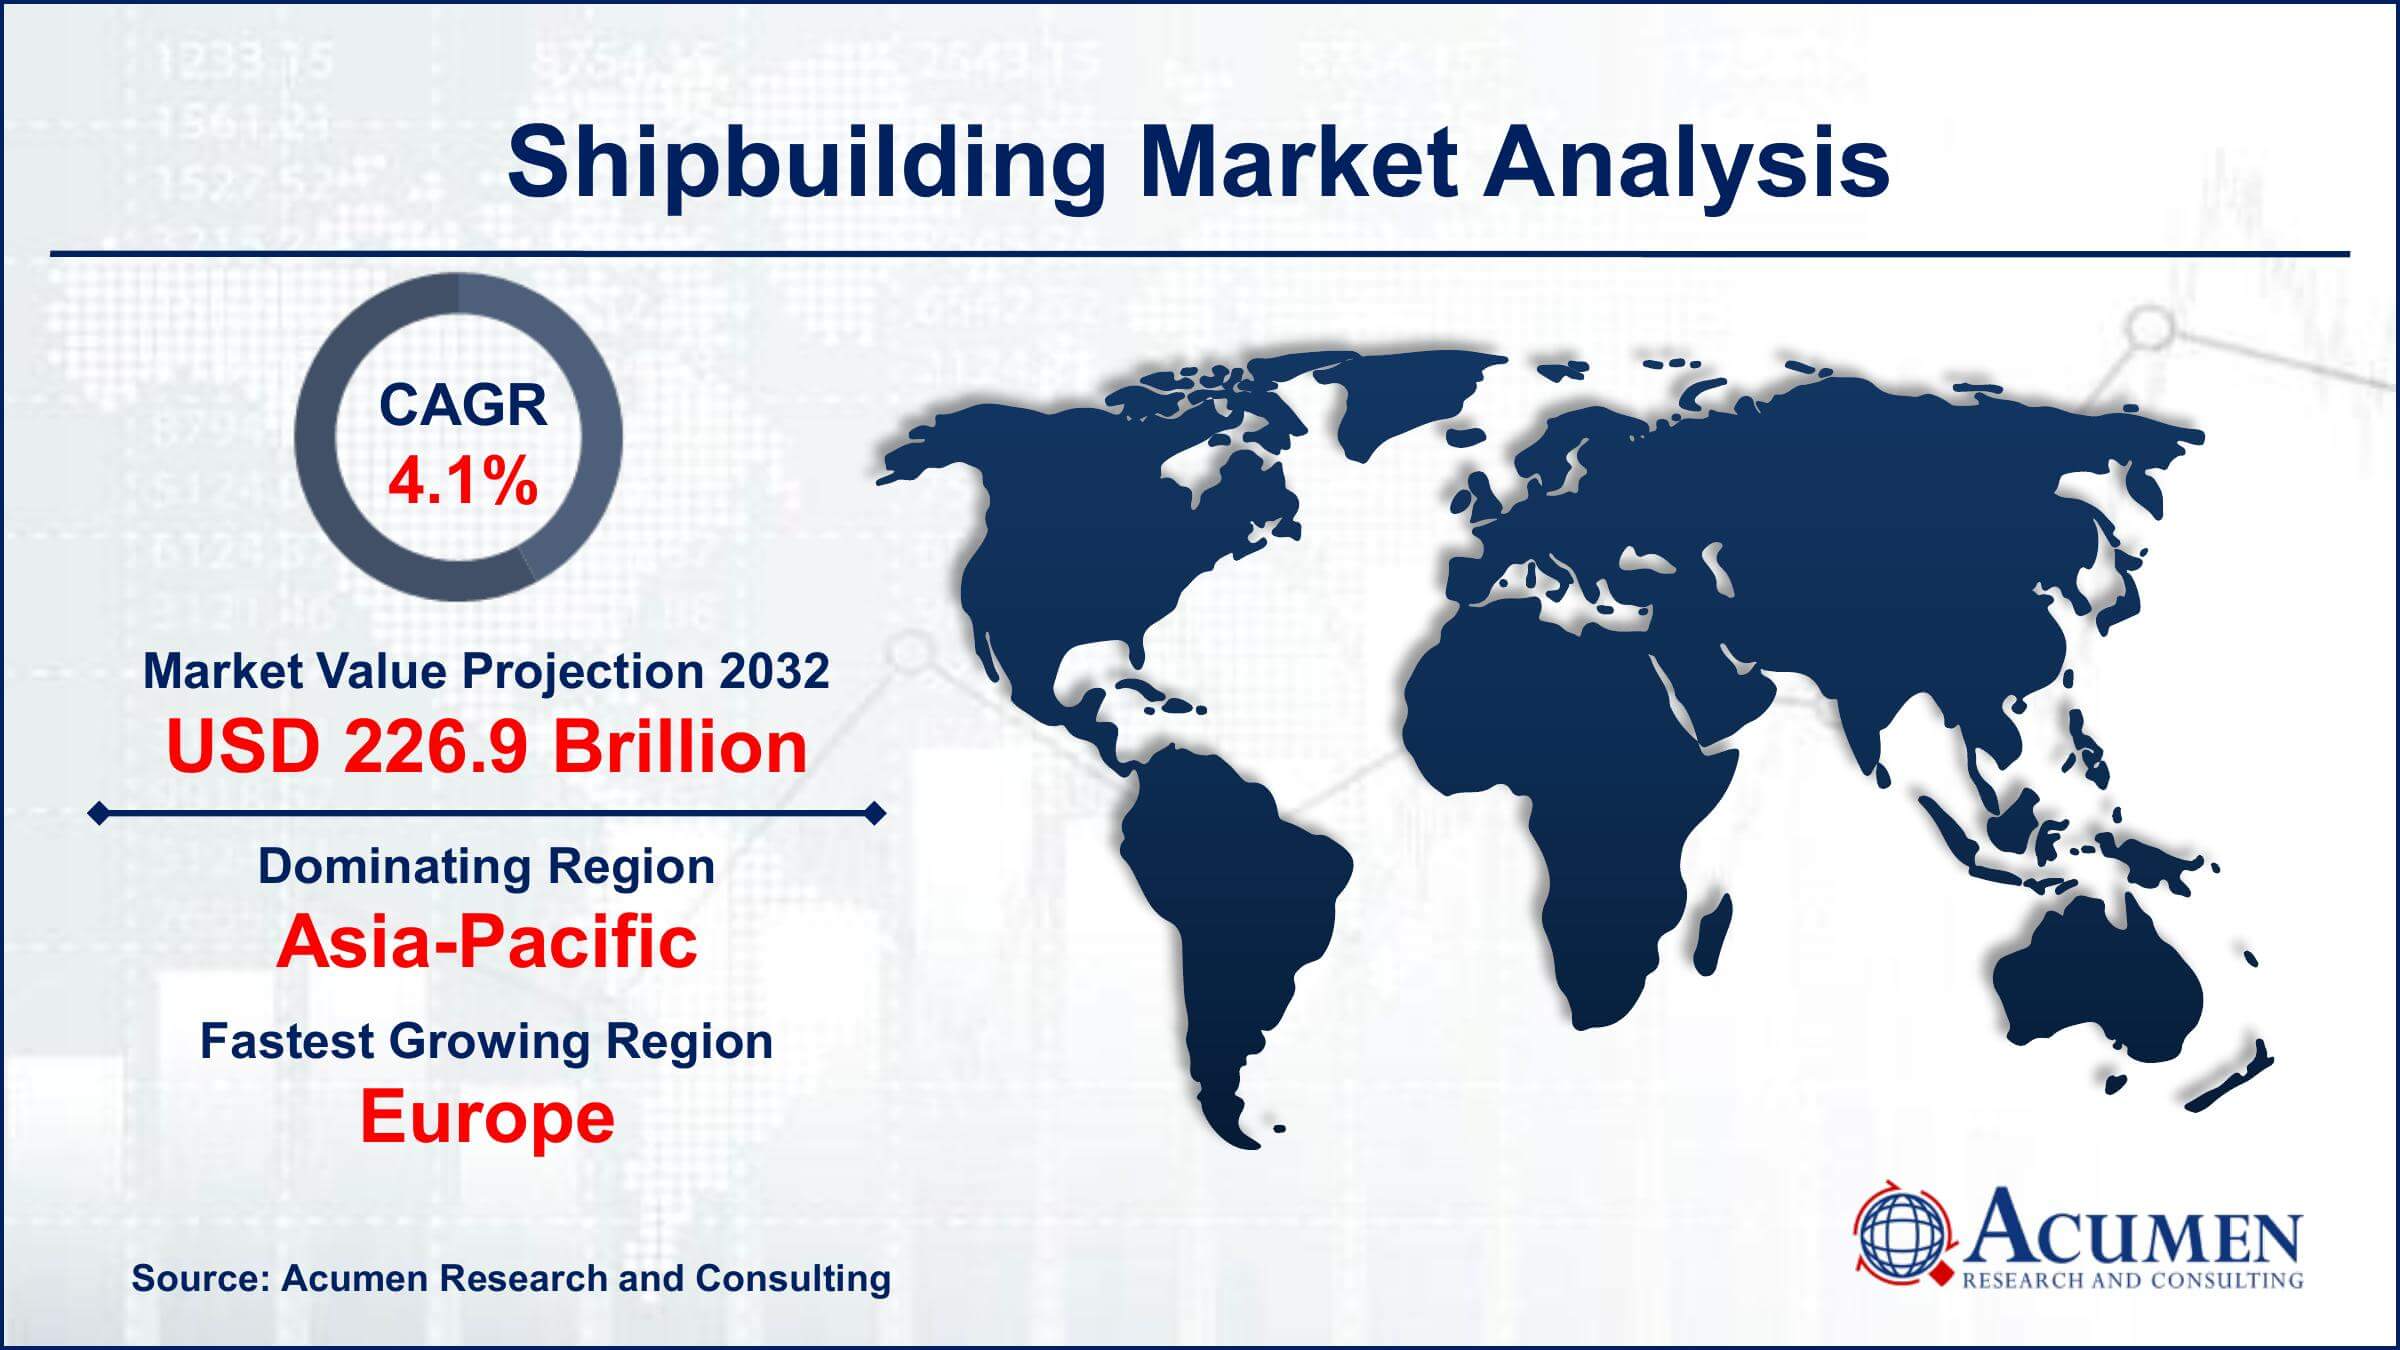 Global Shipbuilding Market Trends